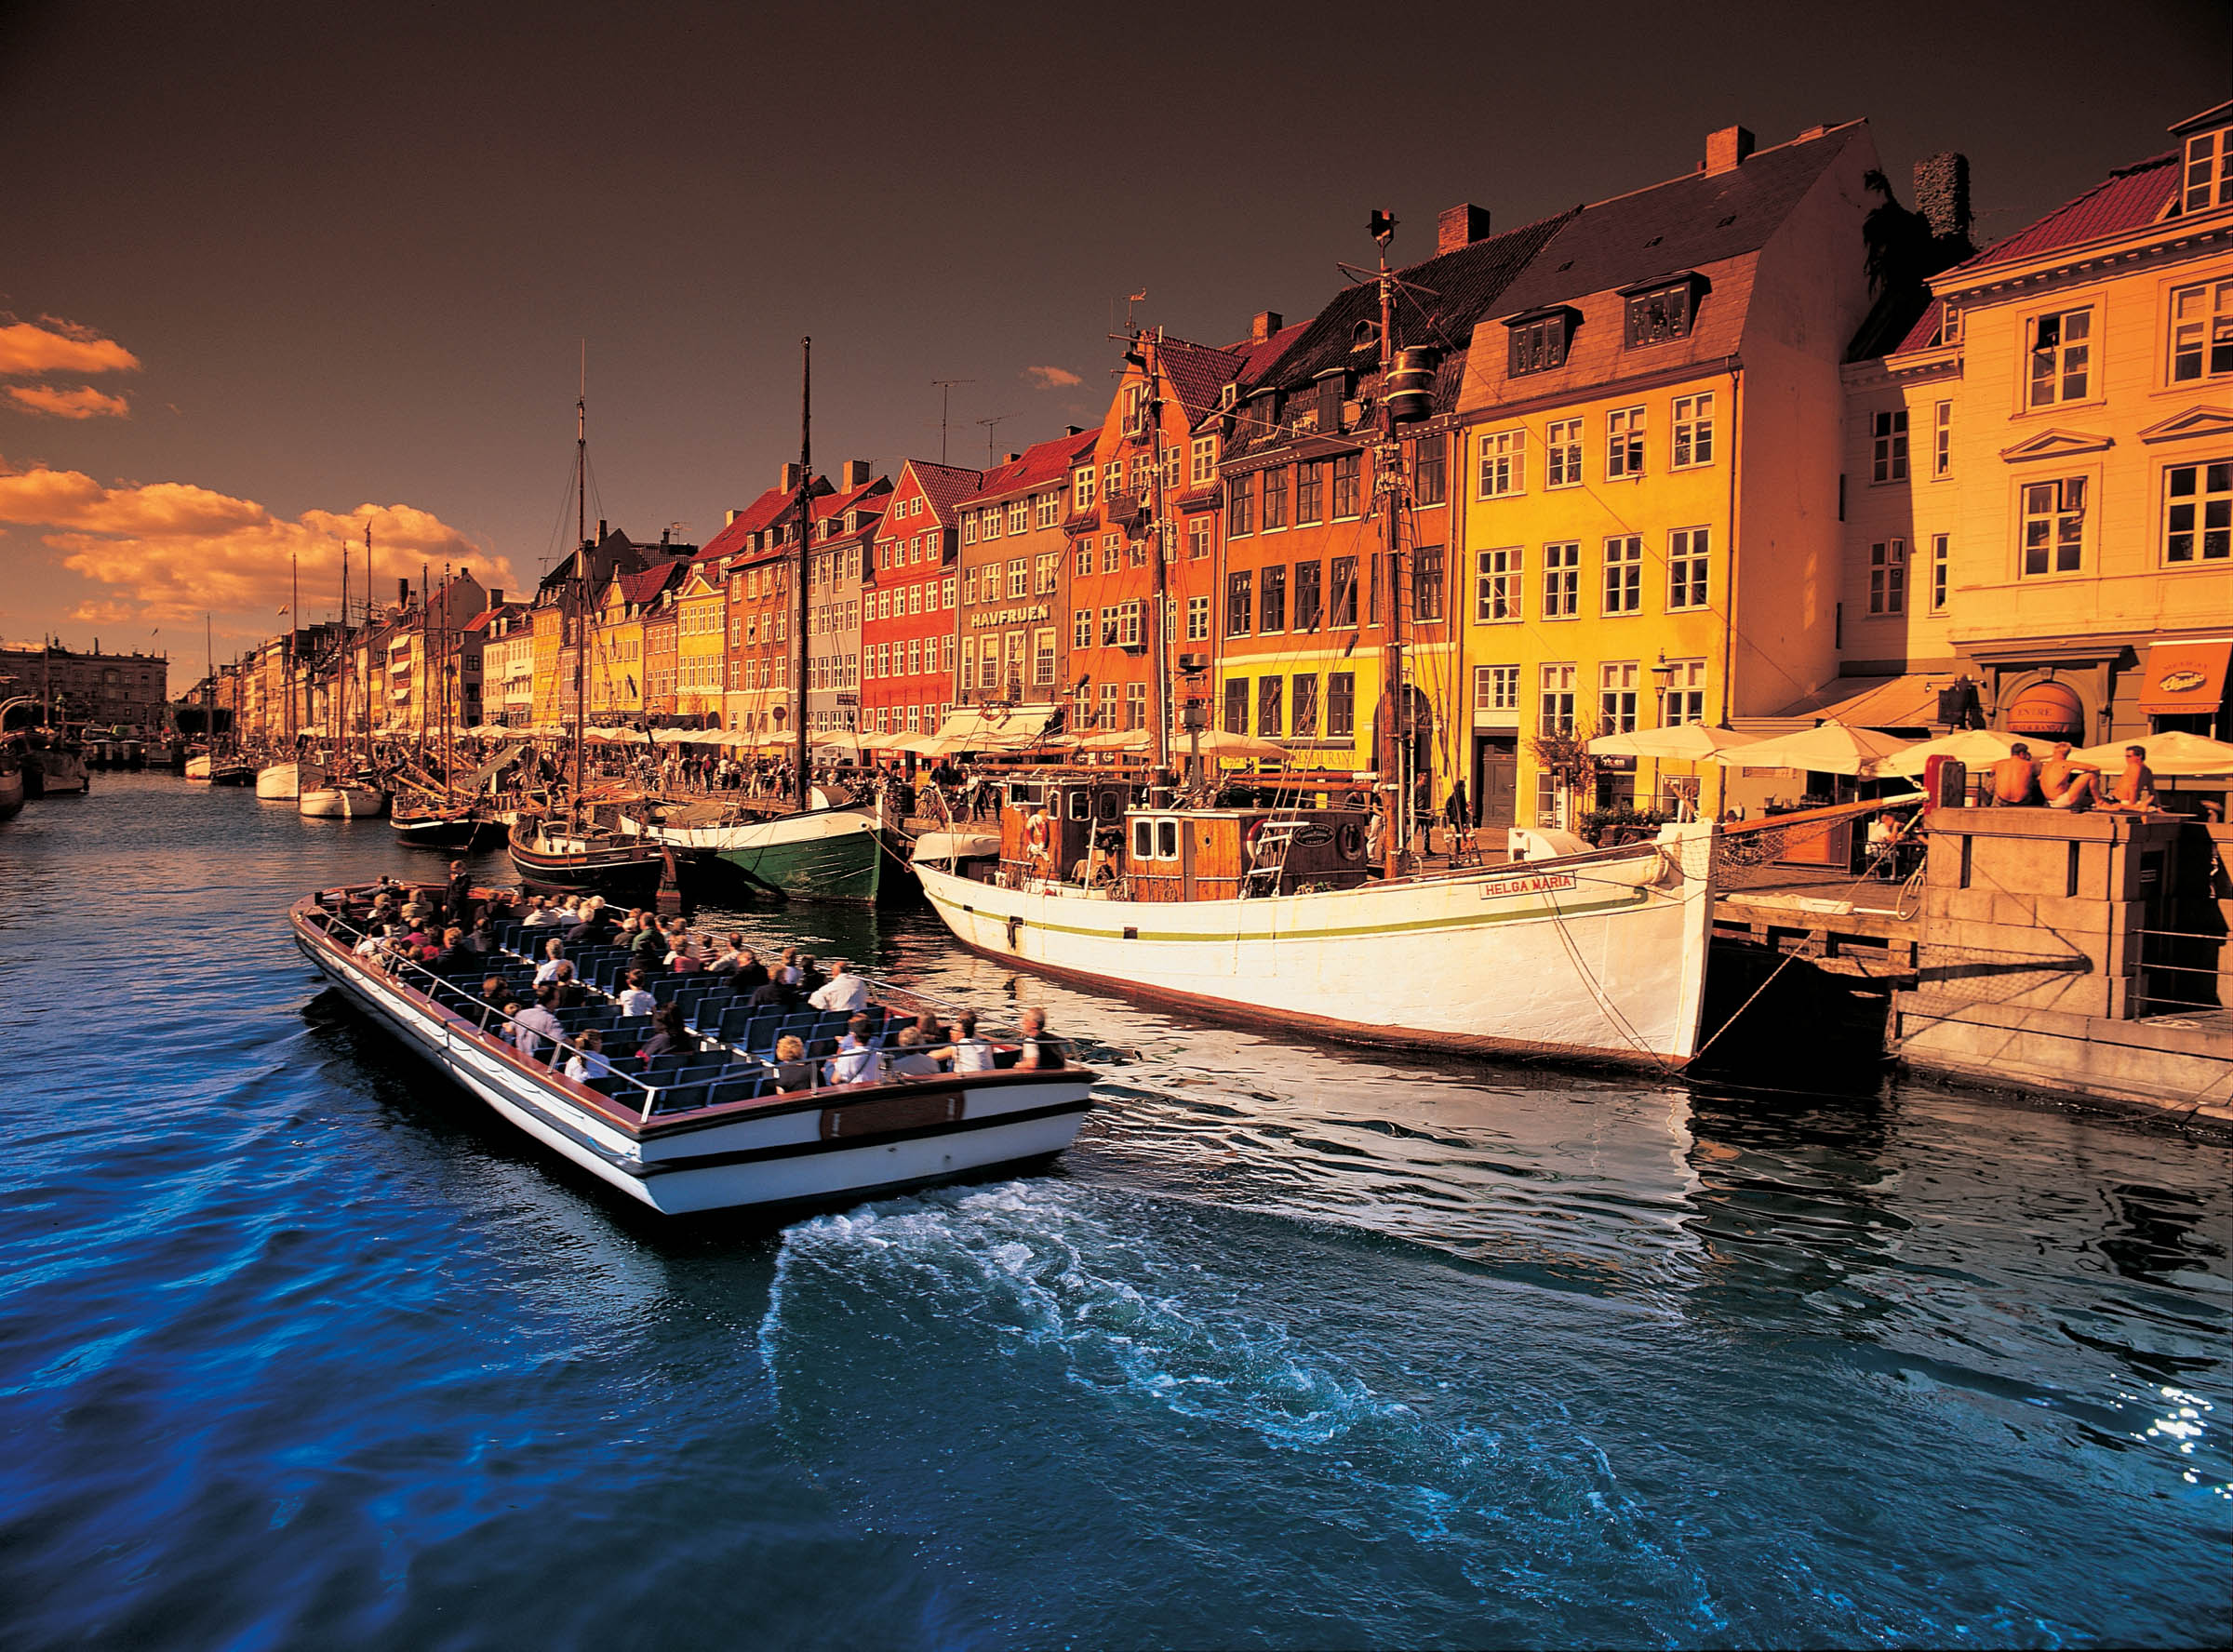 Danmark. Денмарк Дания. Копенгаген столица Дании. Канал Нюхавн Копенгаген. Датский залив Копенгаген.